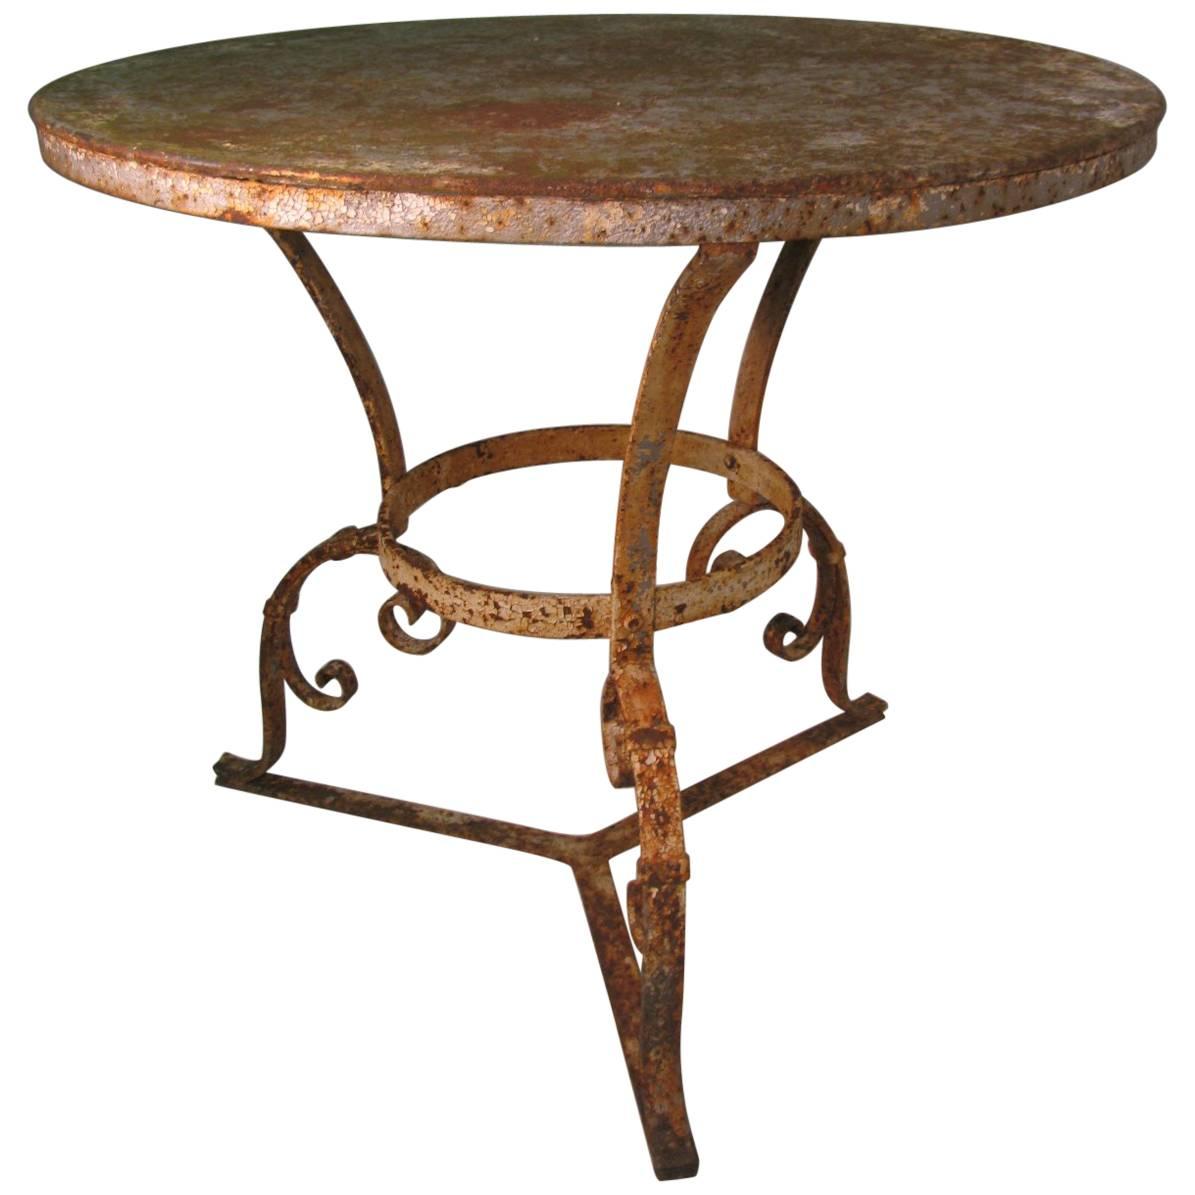 Late 19th Century Hand-Wrought Iron Garden Table